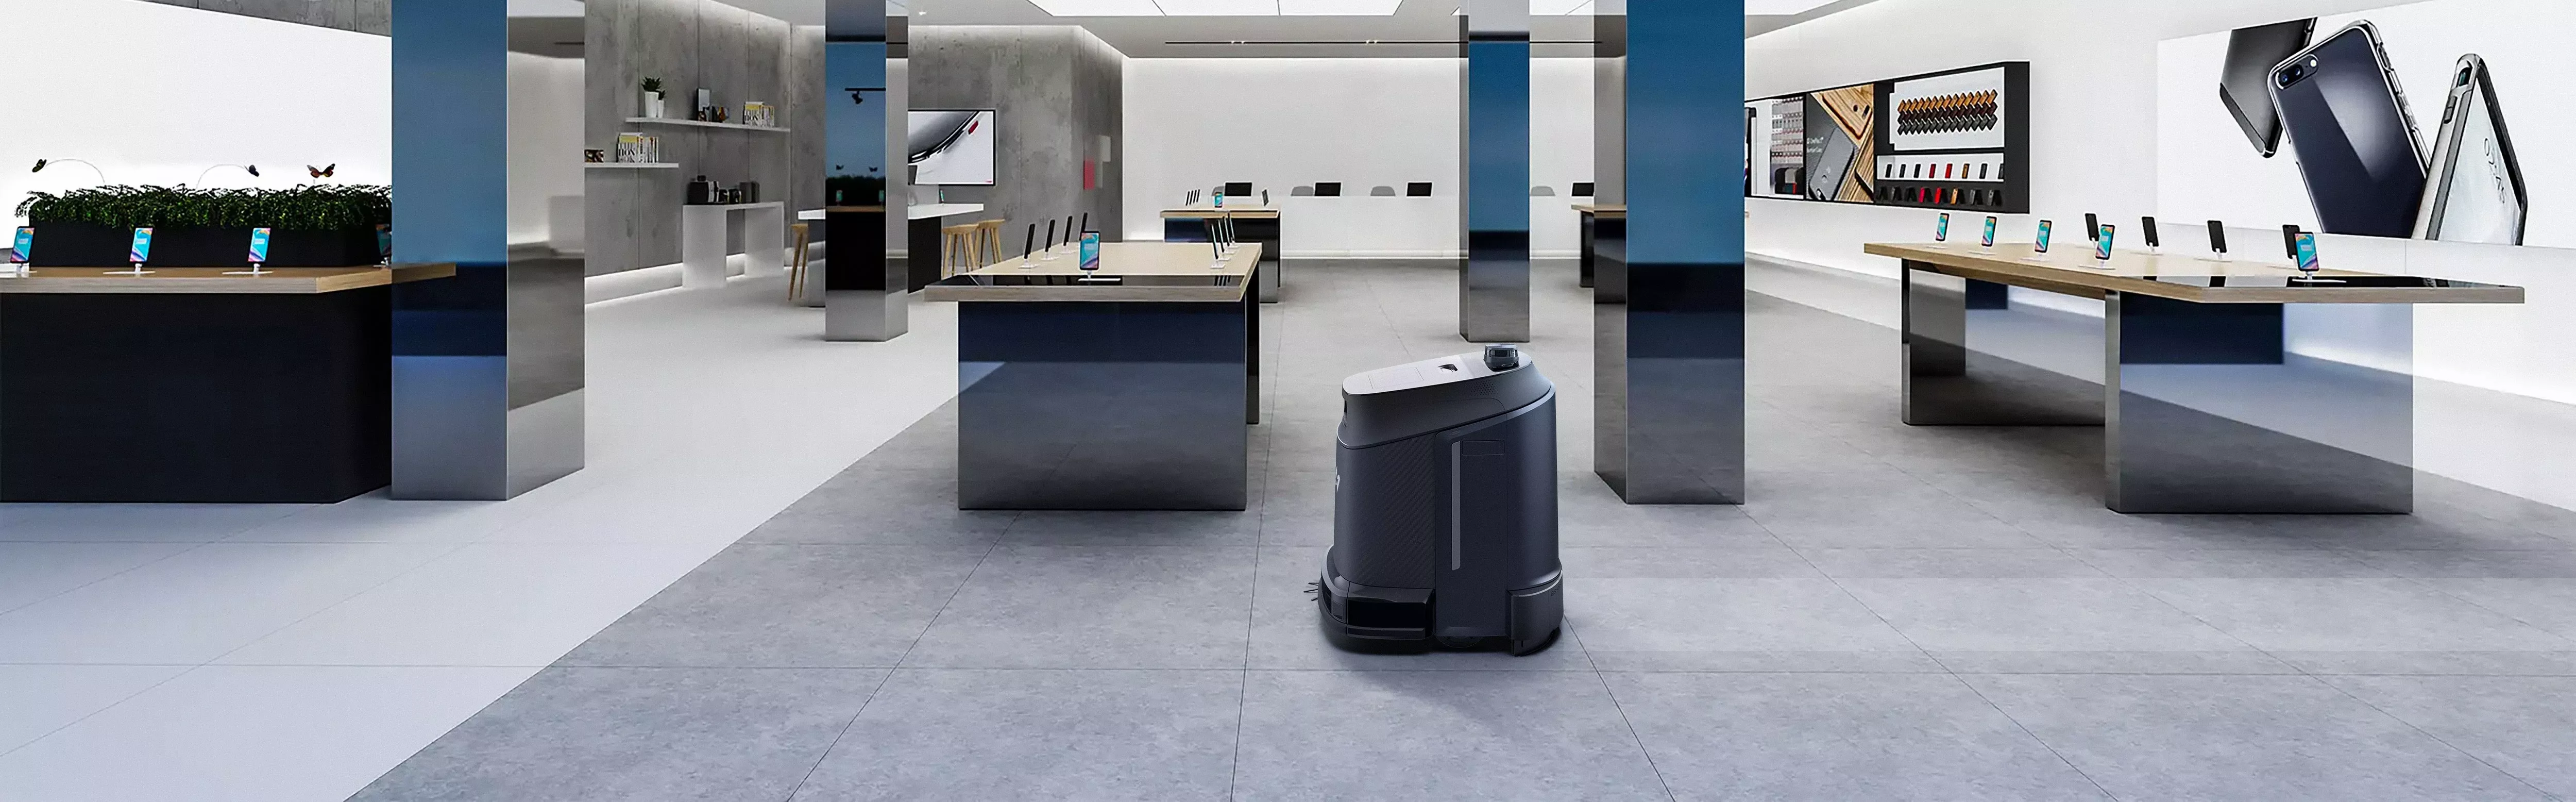 Autonomous cleaning solution for retail stores